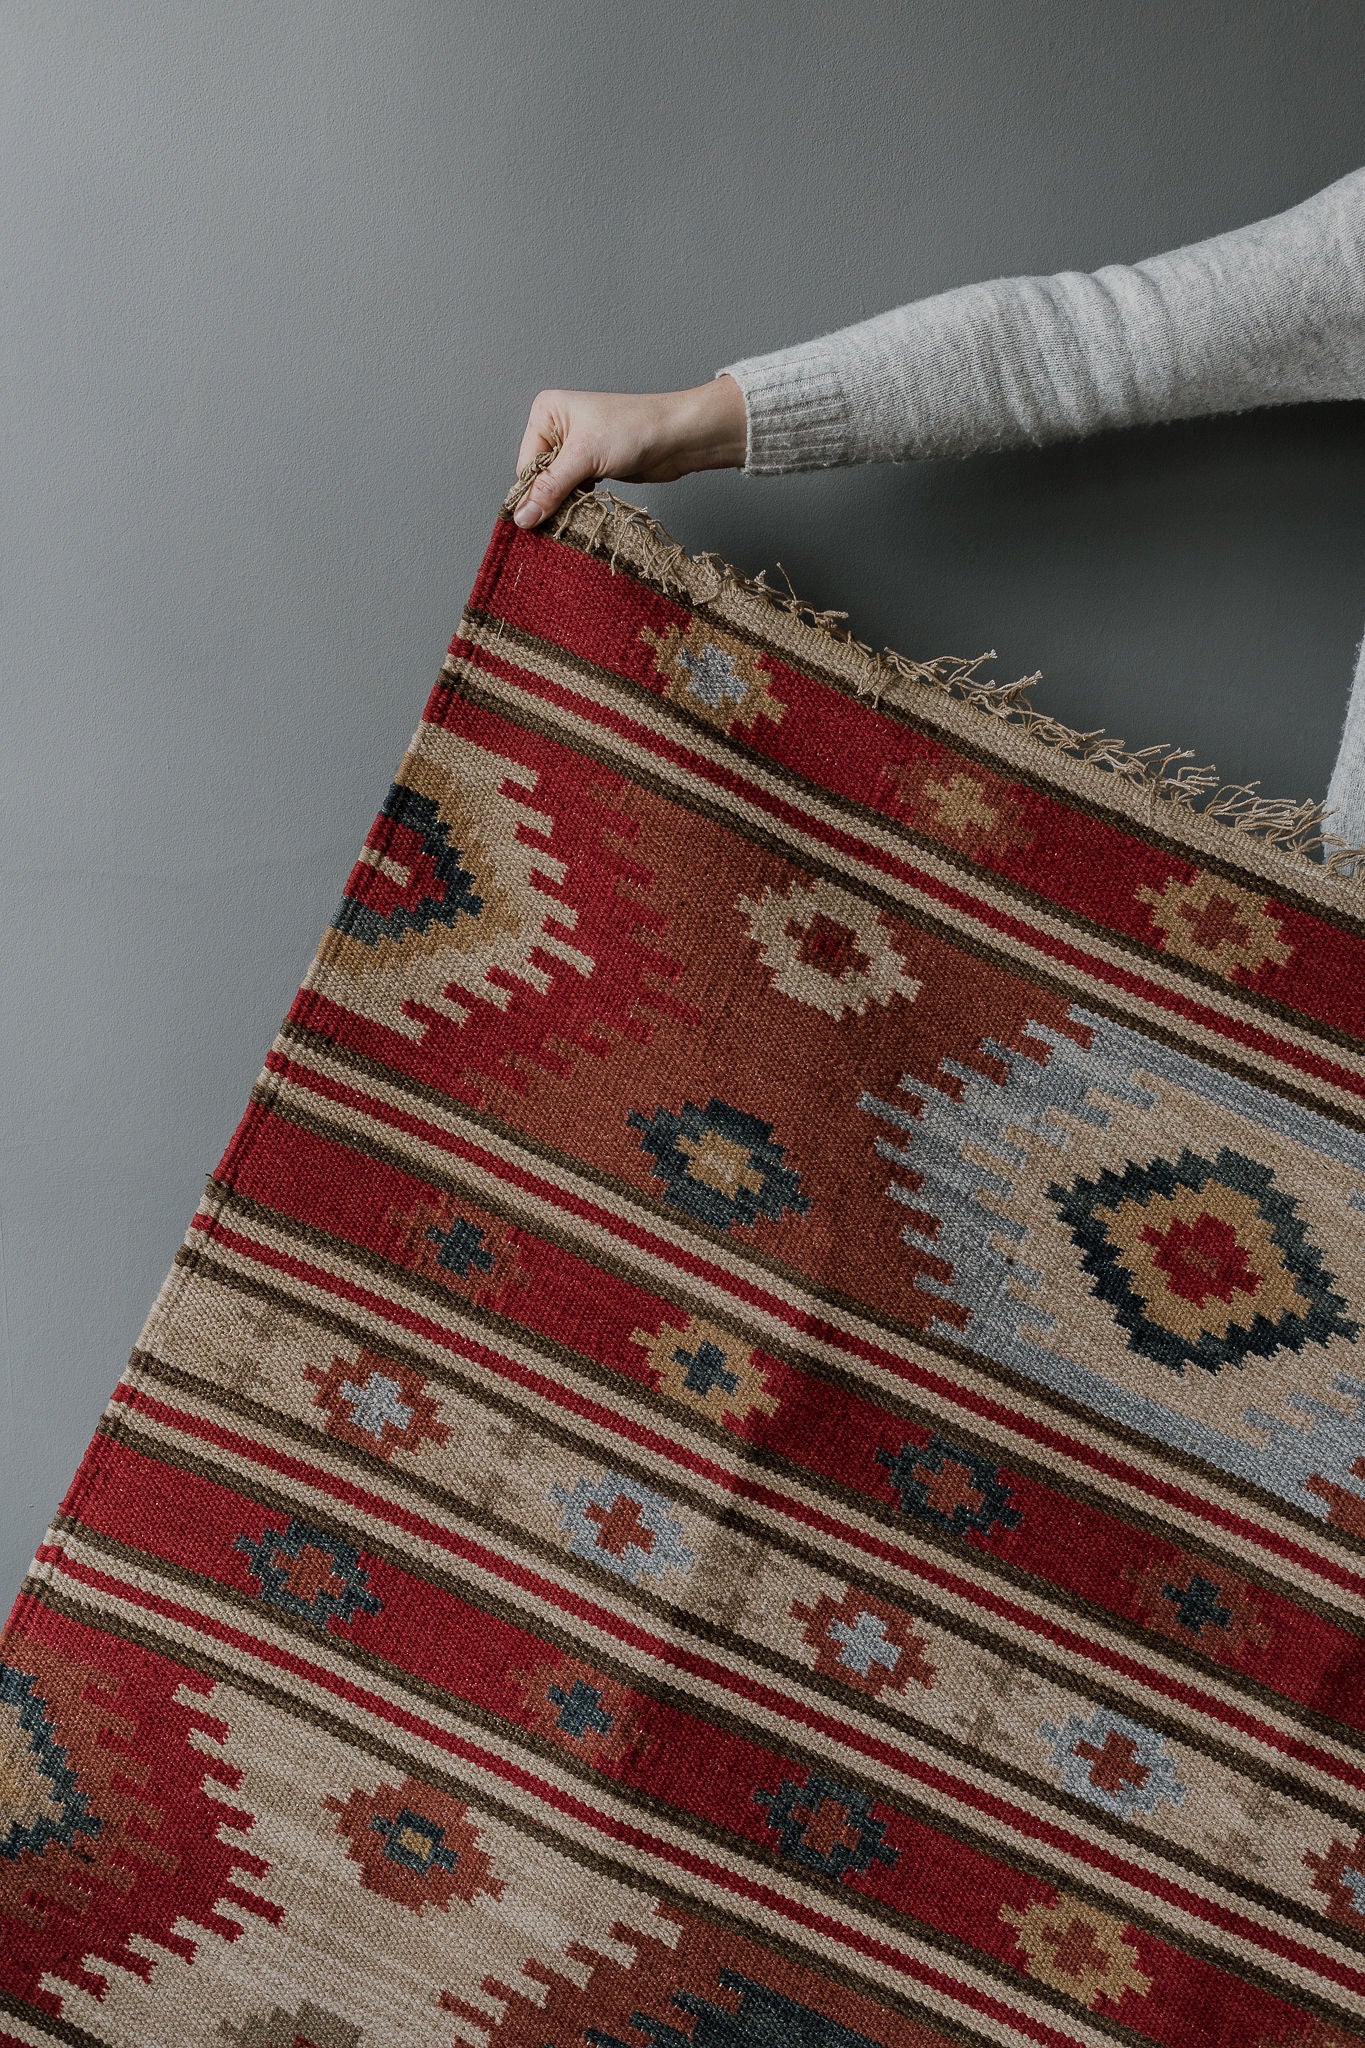 Handmade red kilim rug